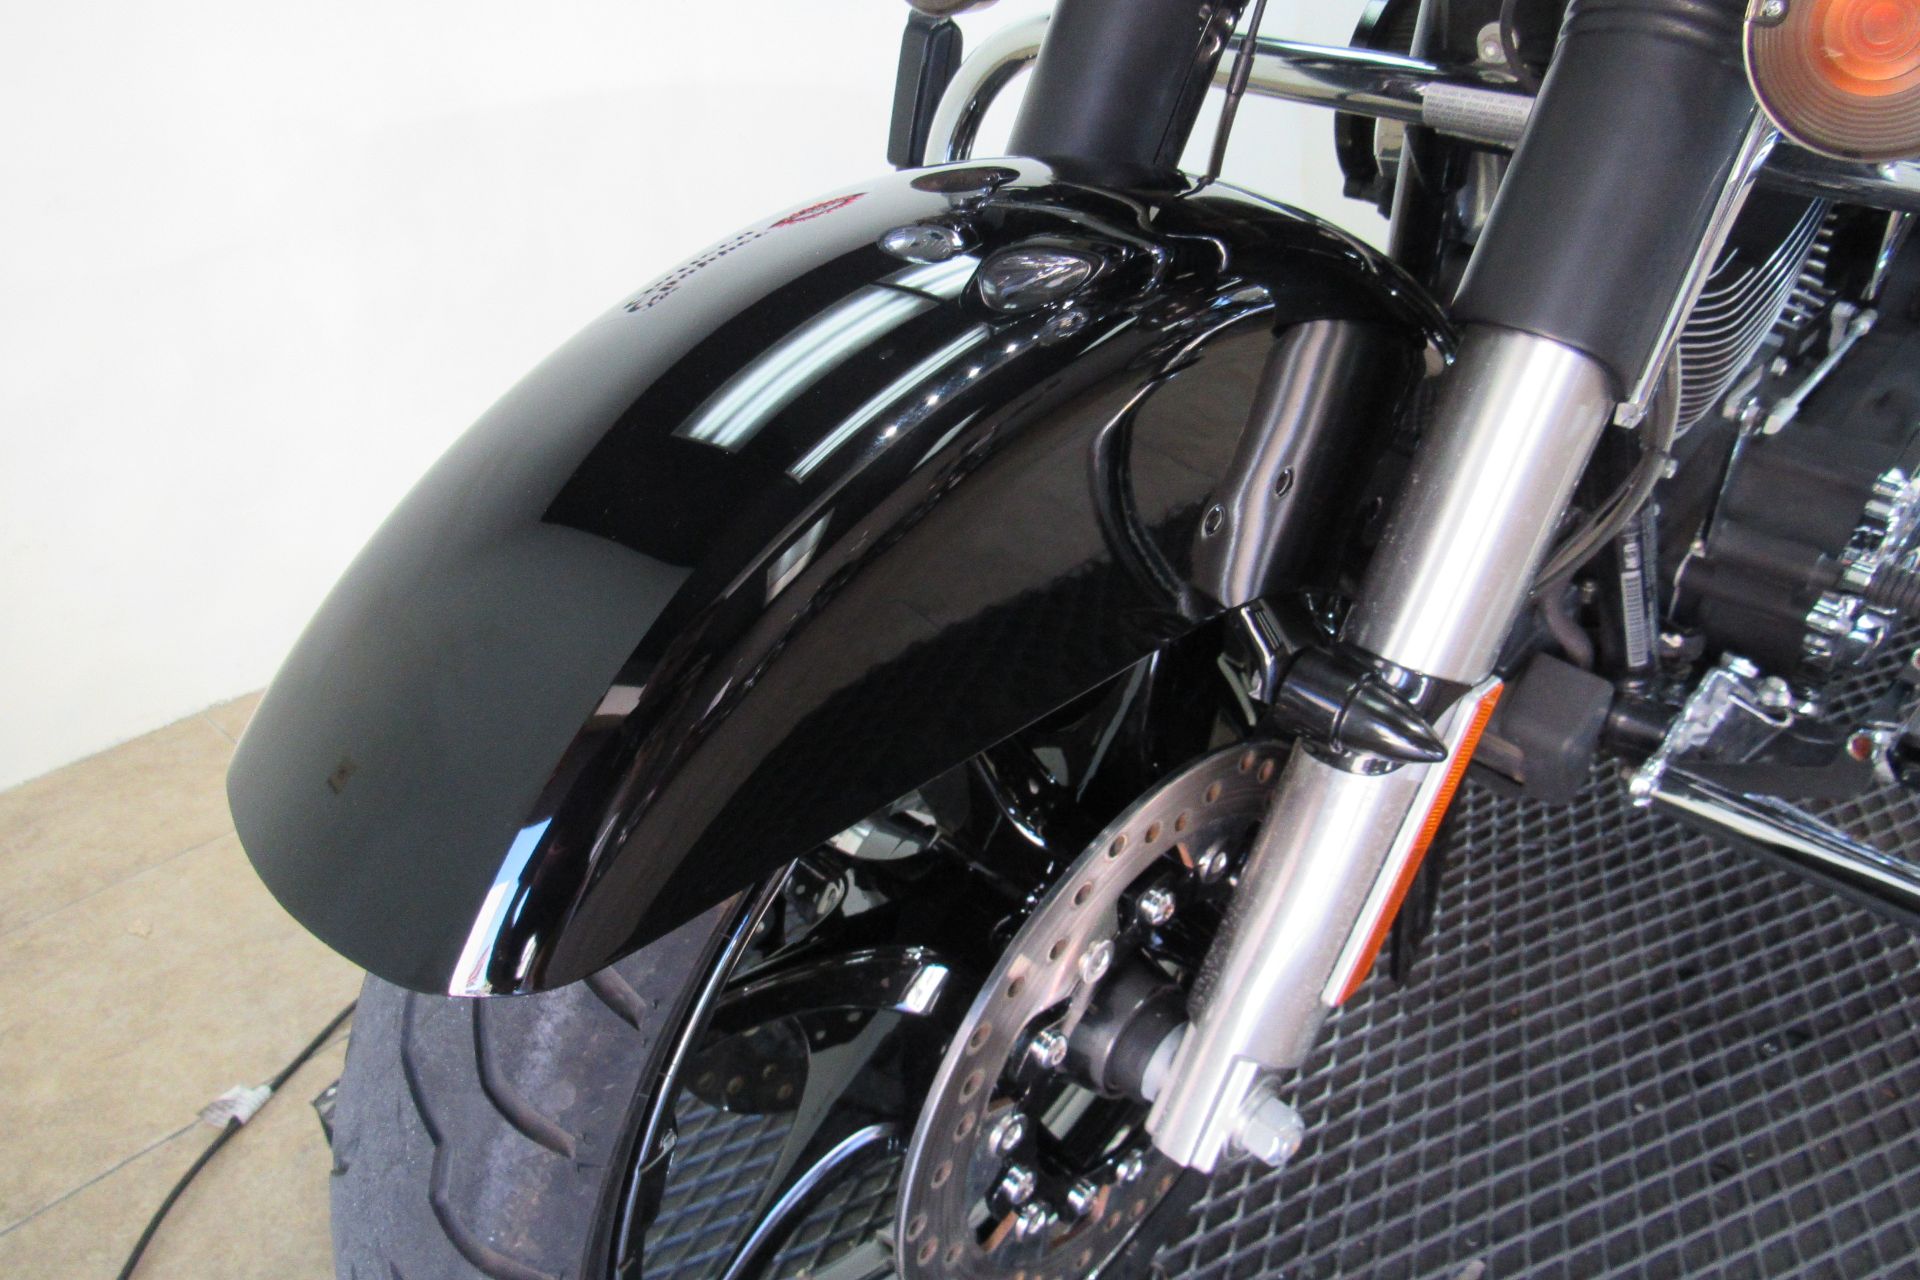 2012 Harley-Davidson Electra Glide® Ultra Limited in Temecula, California - Photo 22